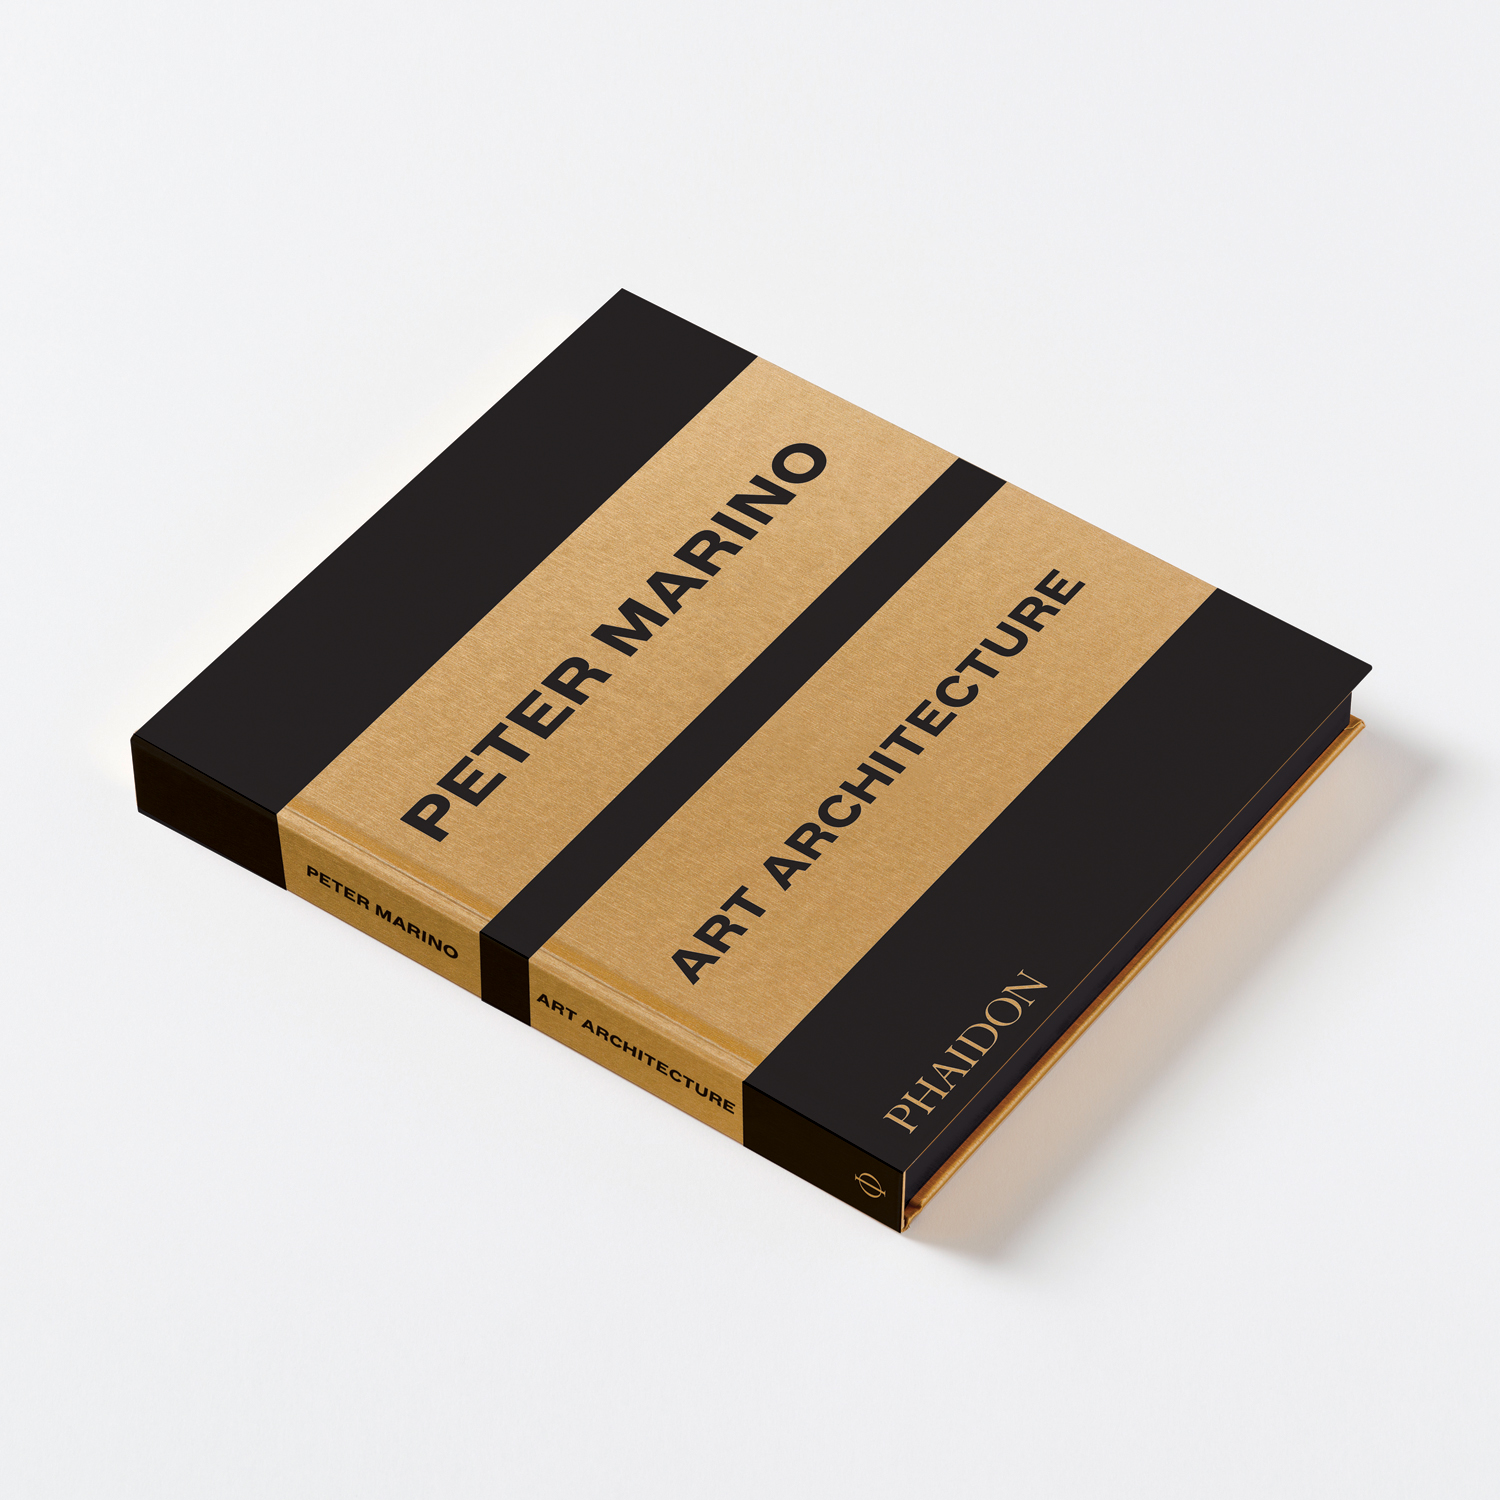 Peter Marino: The Luxury Edition